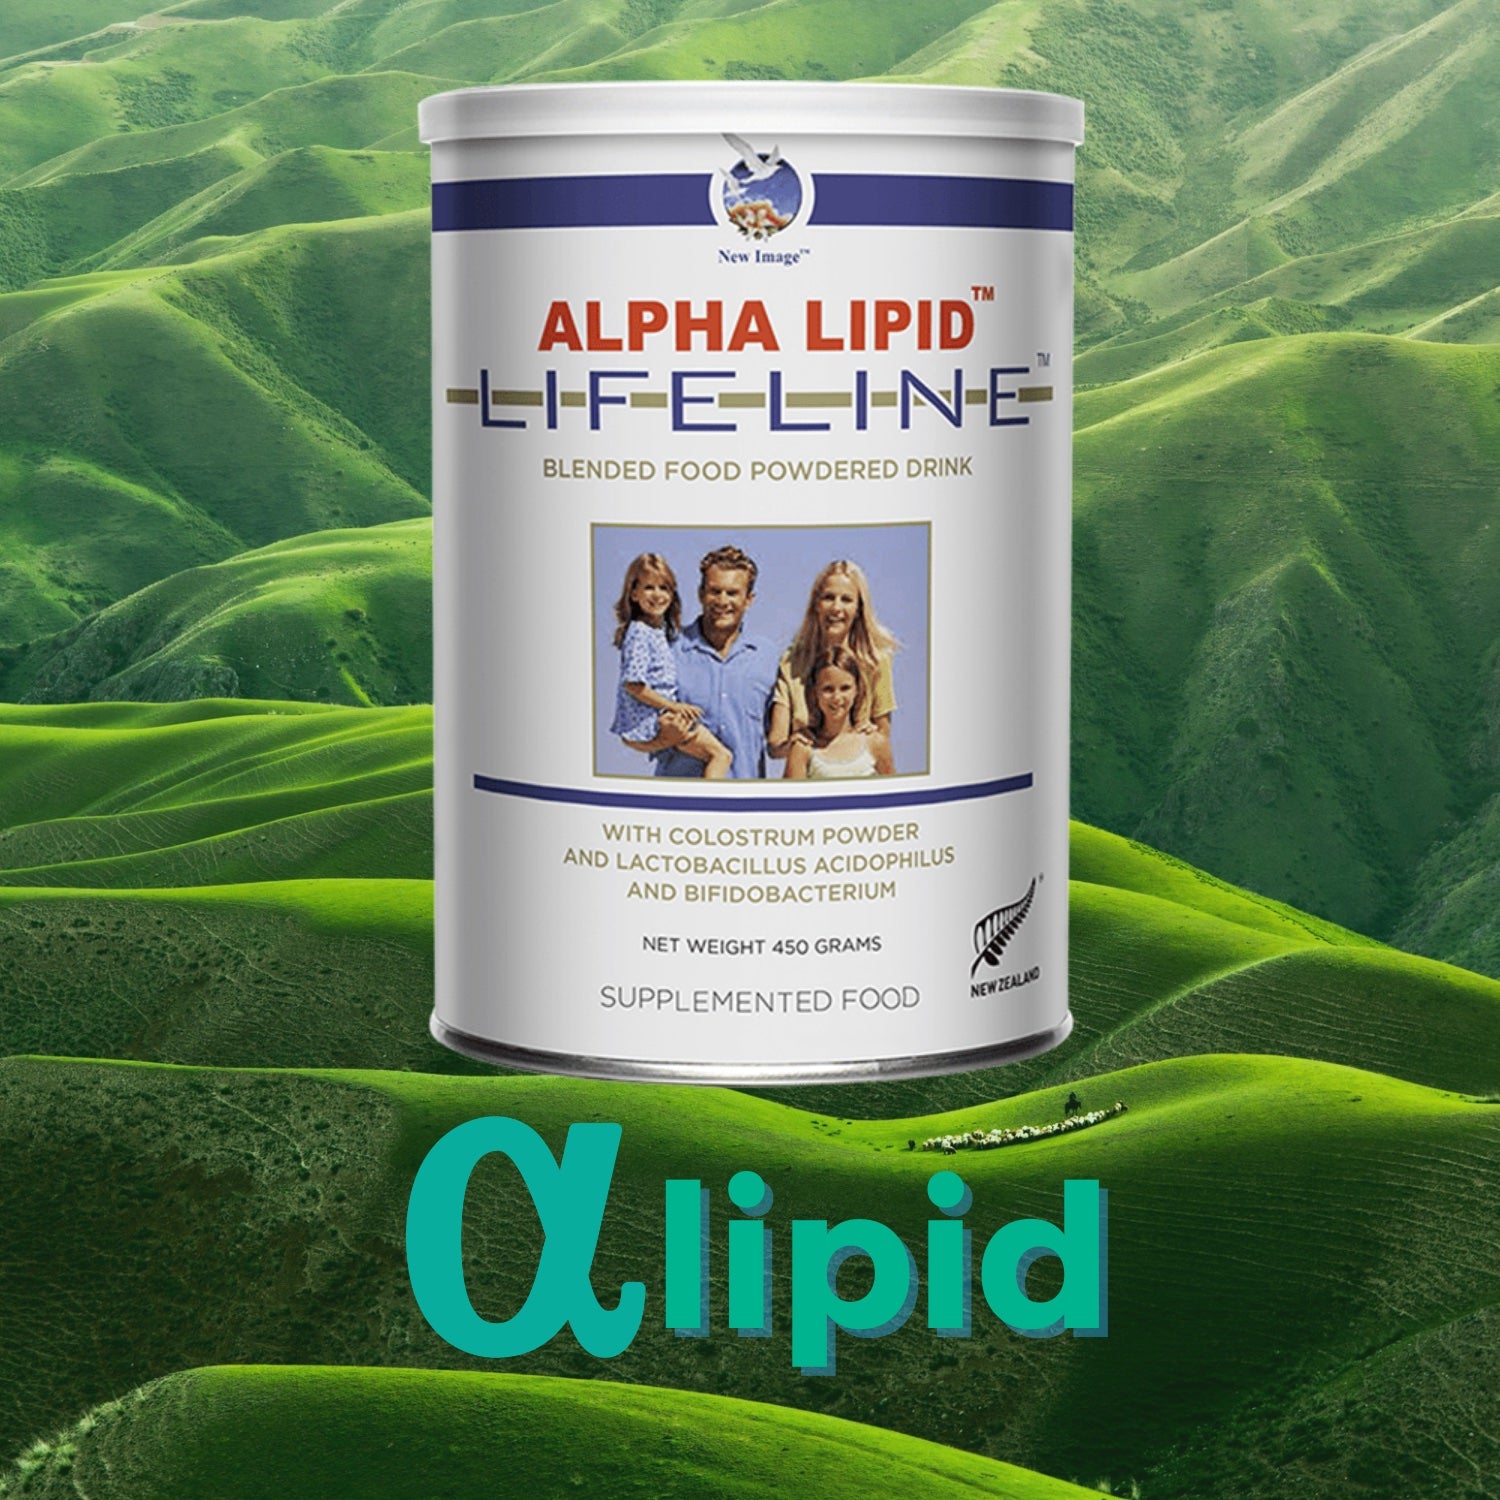 alpha-lipid-lifeline-faqs